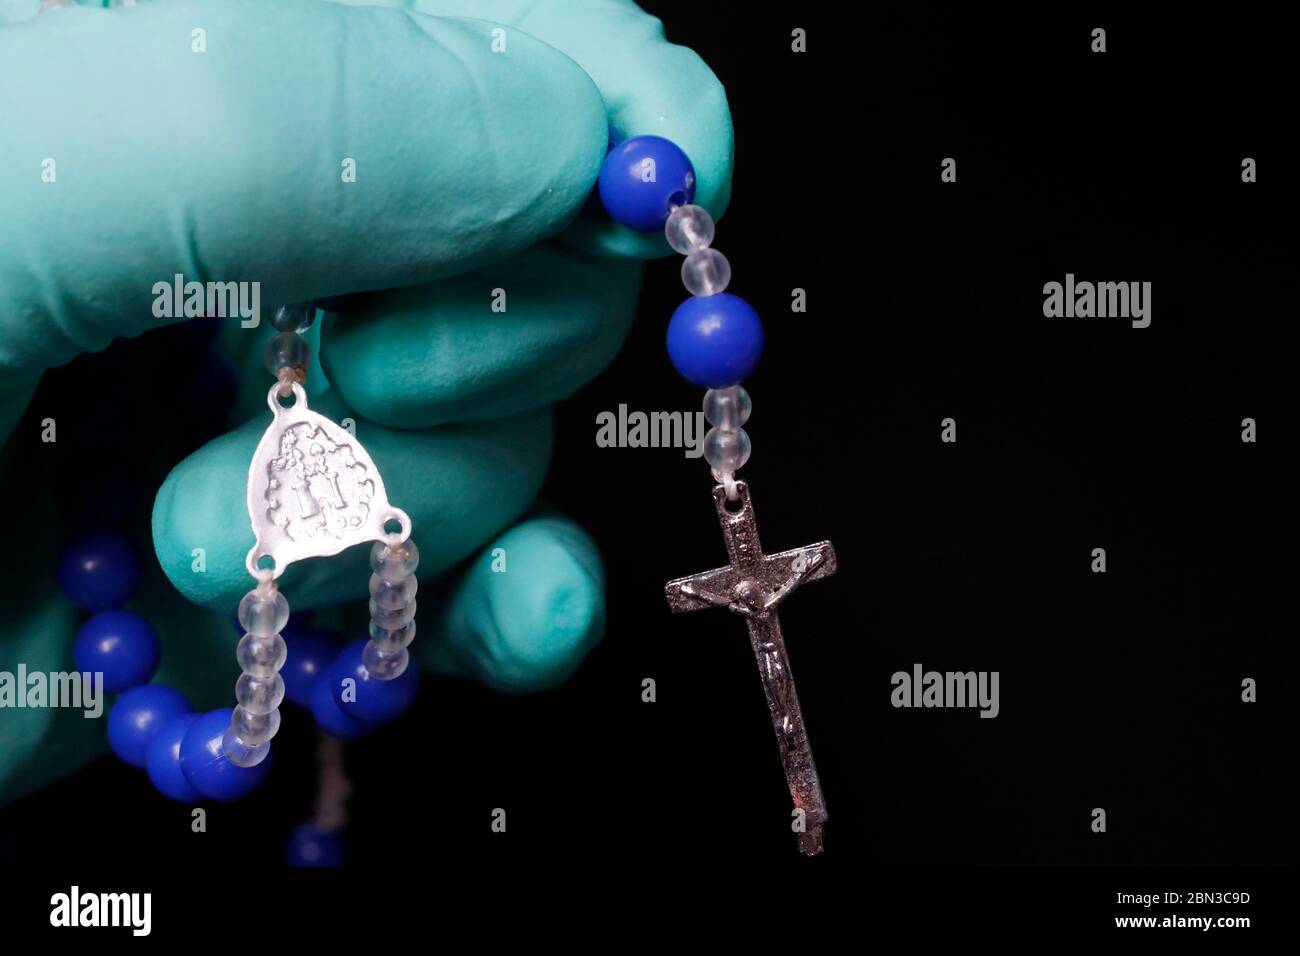 Rosarios religiosos fotografías e imágenes de alta resolución - Alamy